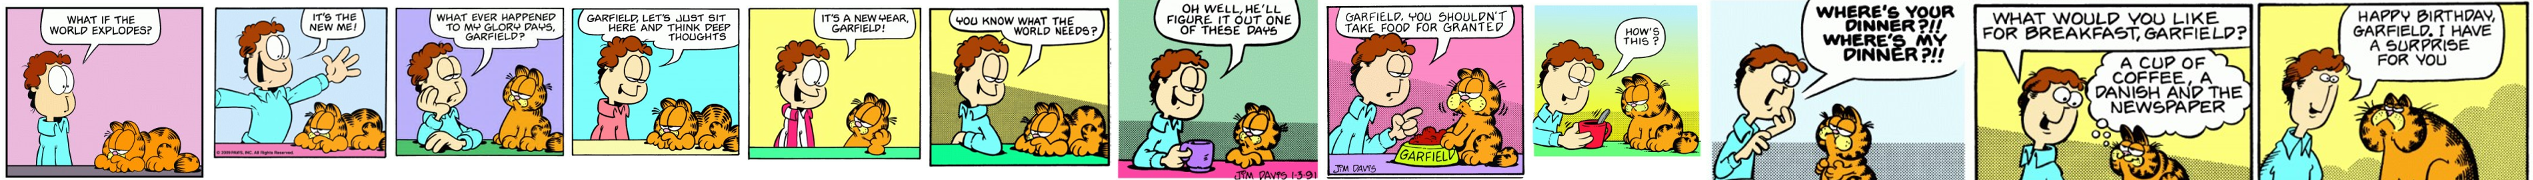 Jon's Evolution in Reverse (including Garfield)